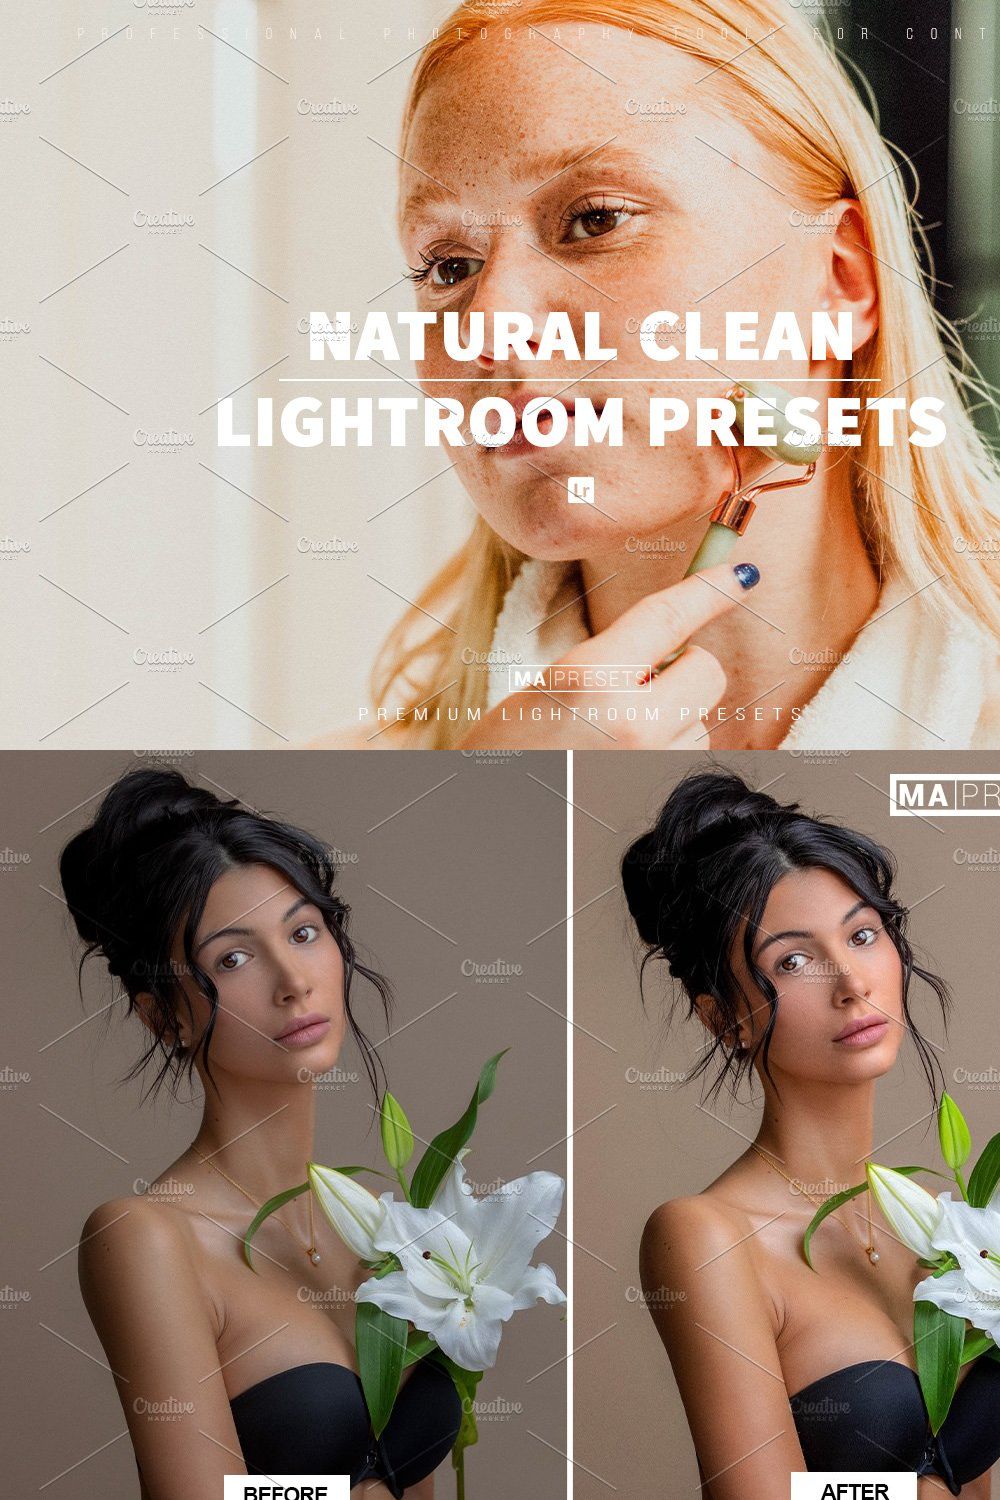 10 NATURAL CLEAN Lightroom Presets pinterest preview image.